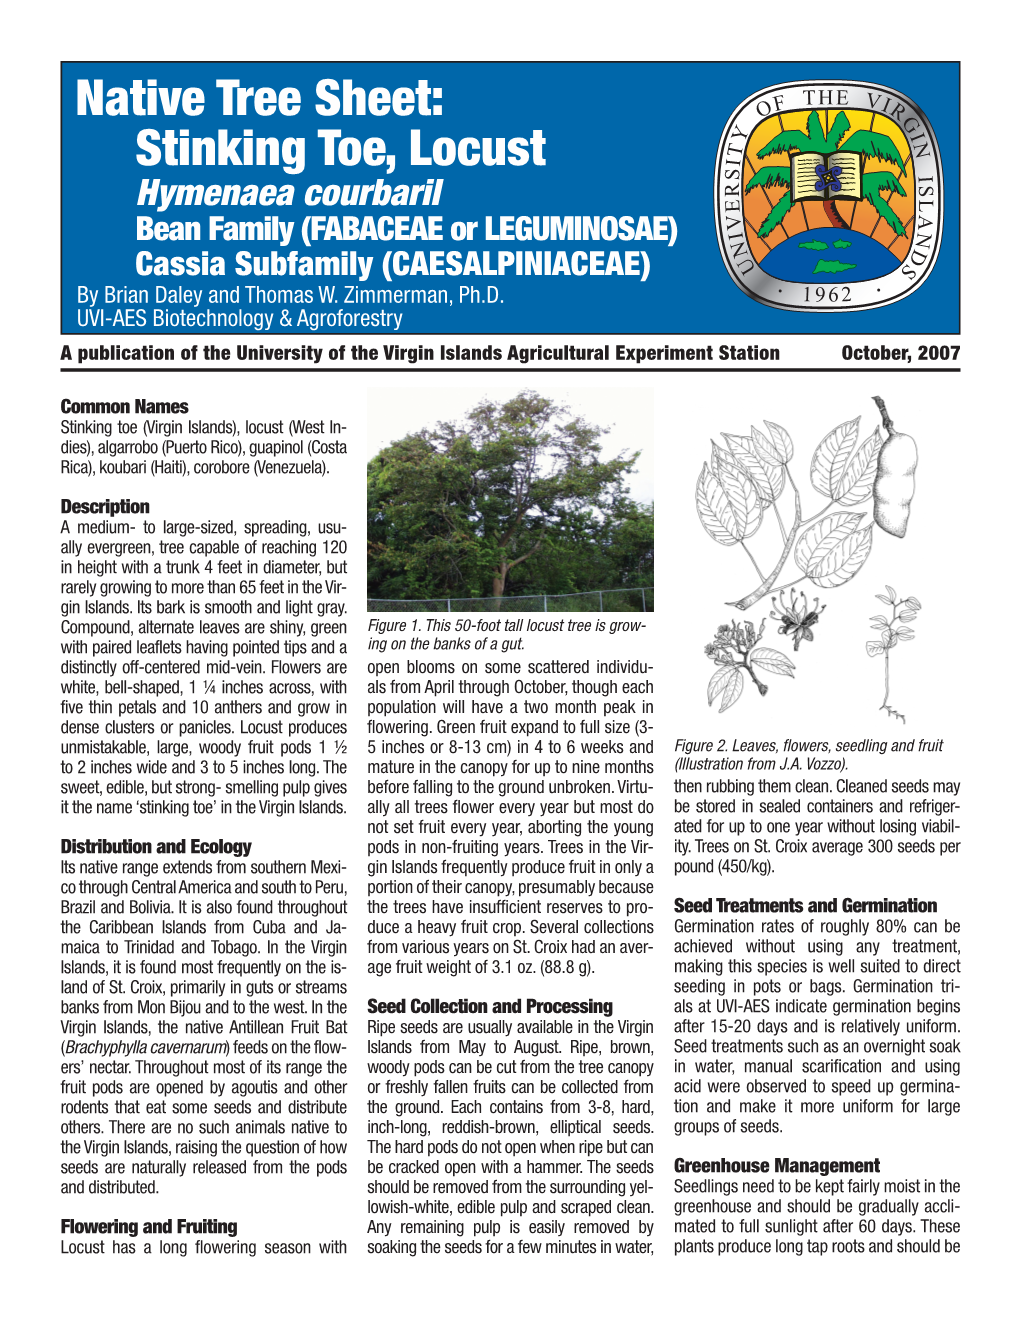 Native Tree Sheet: Stinking Toe, Locust Hymenaea Courbaril Bean Family (FABACEAE Or LEGUMINOSAE) Cassia Subfamily (CAESALPINIACEAE) by Brian Daley and Thomas W